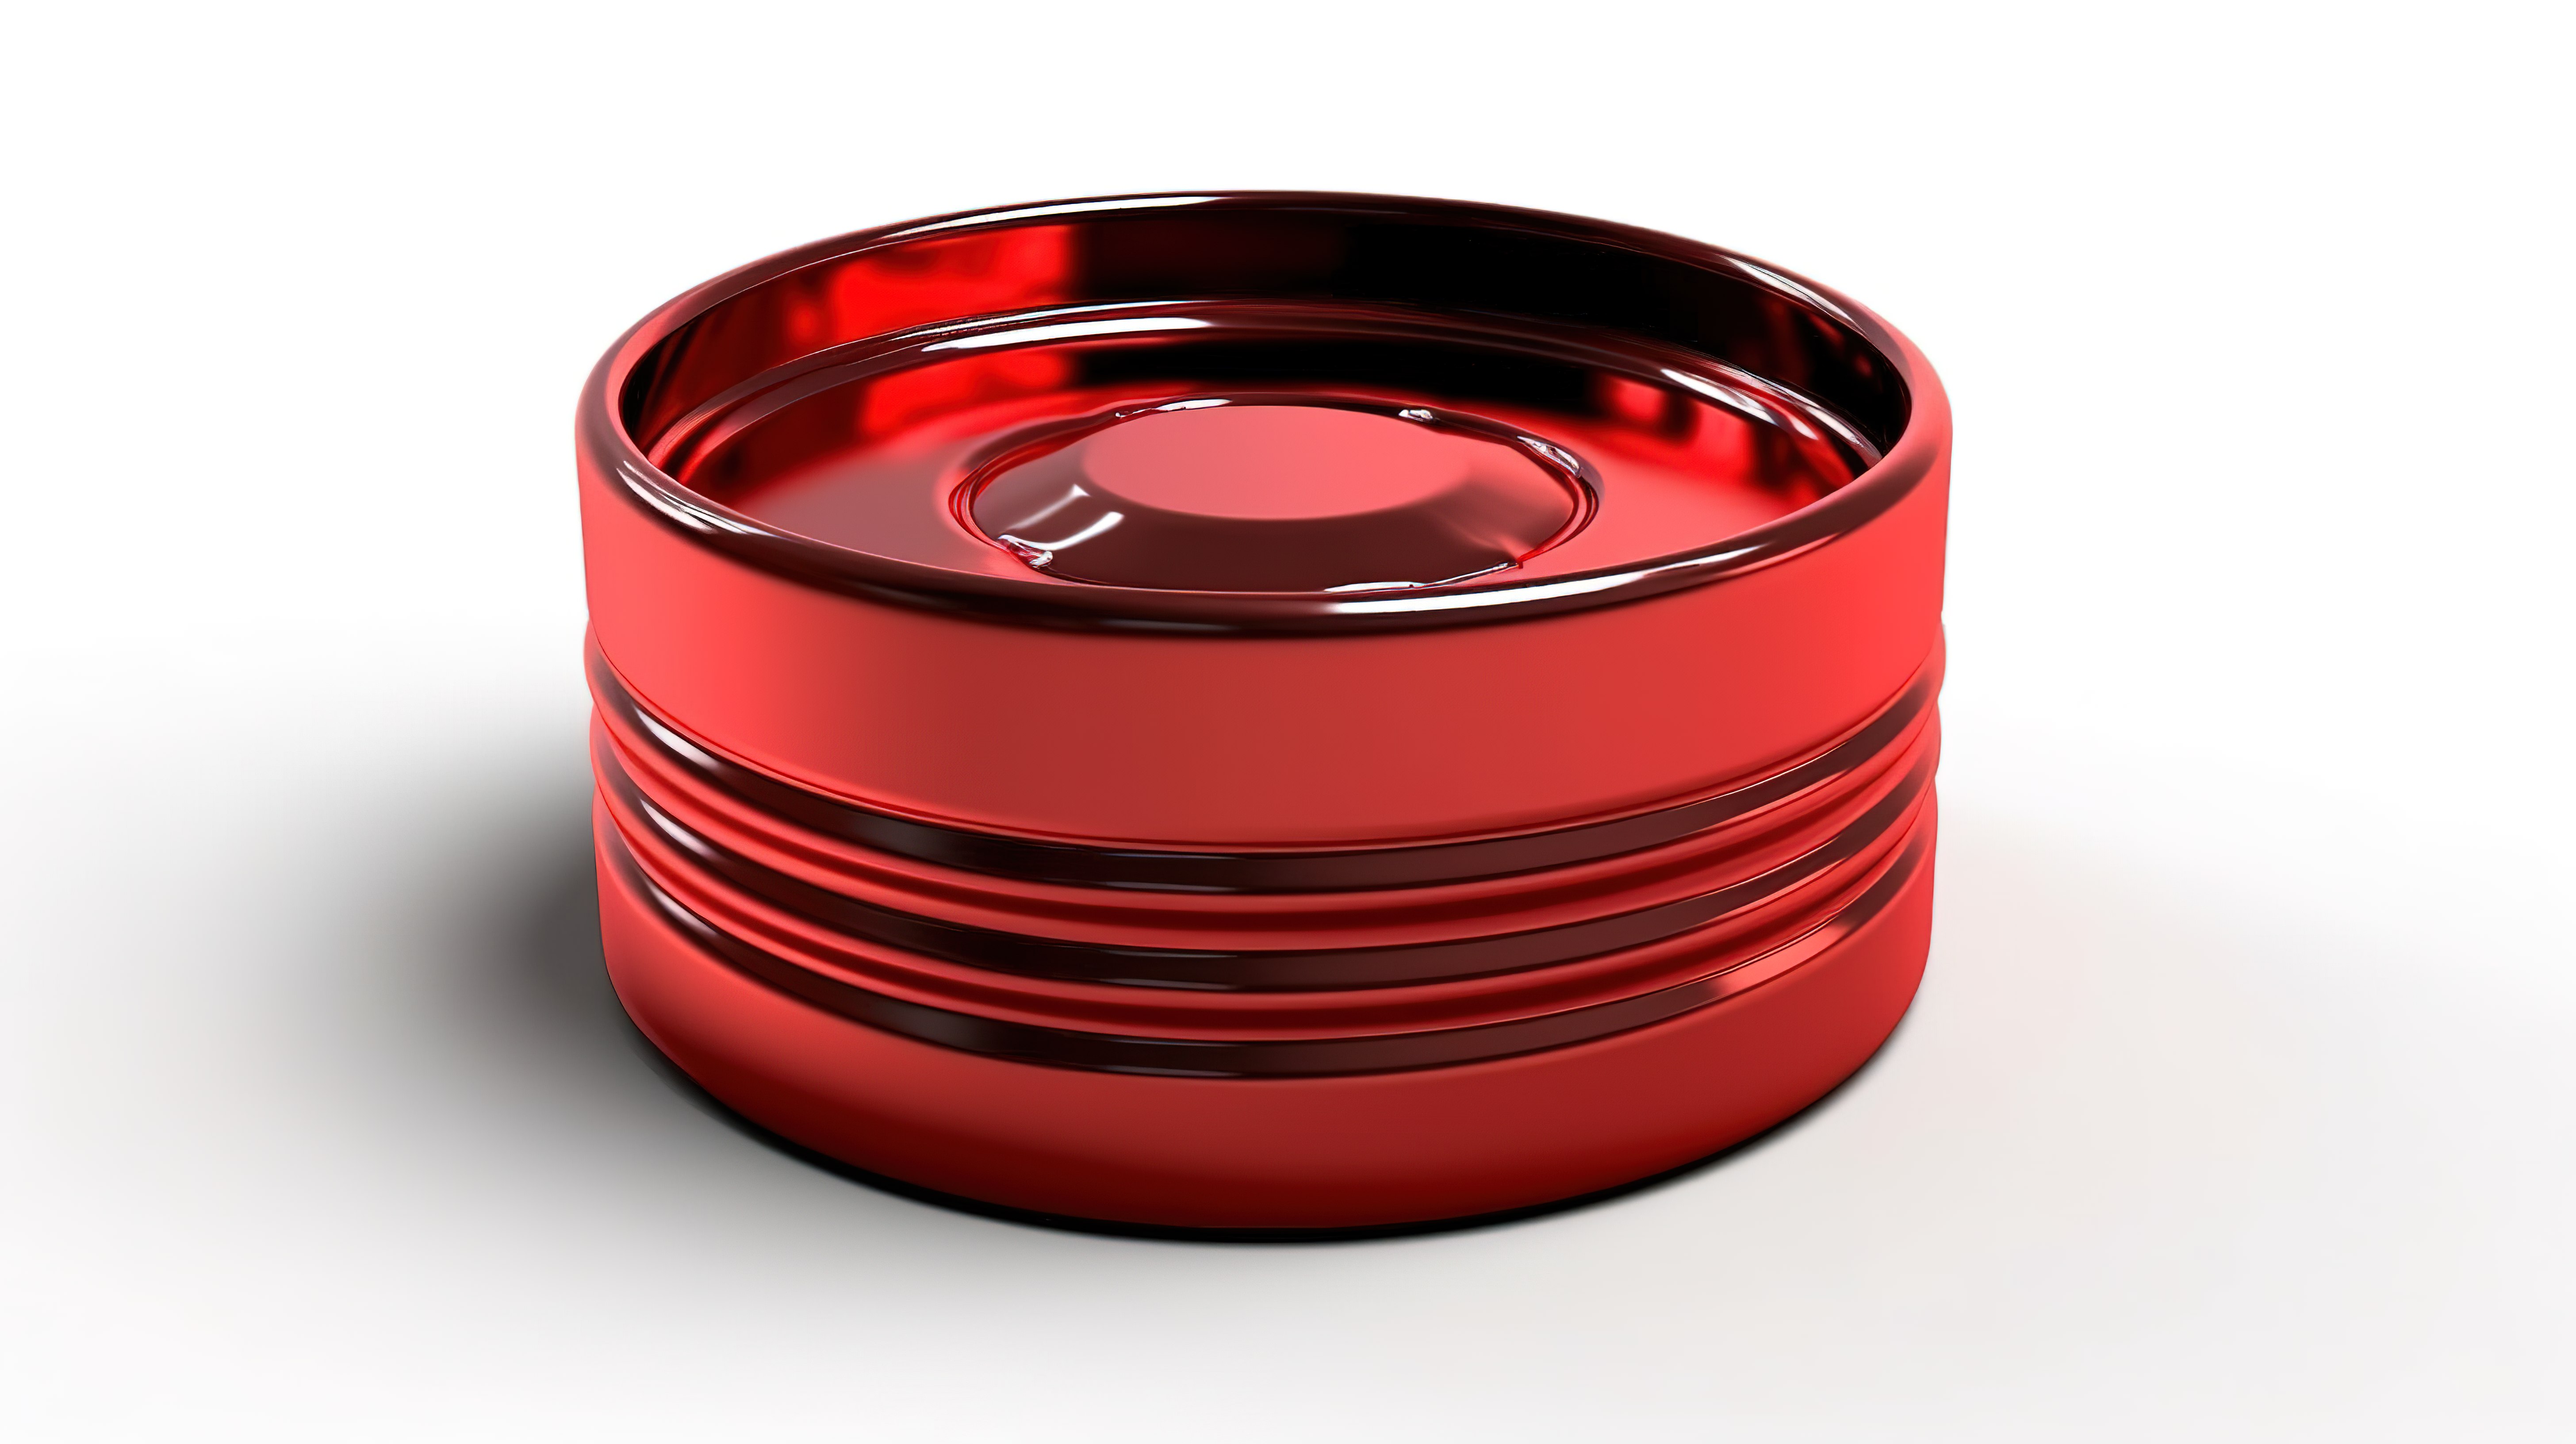 3D 渲染的金属红色容器在白色背景下盛放原油的插图理想作为资源图像图片